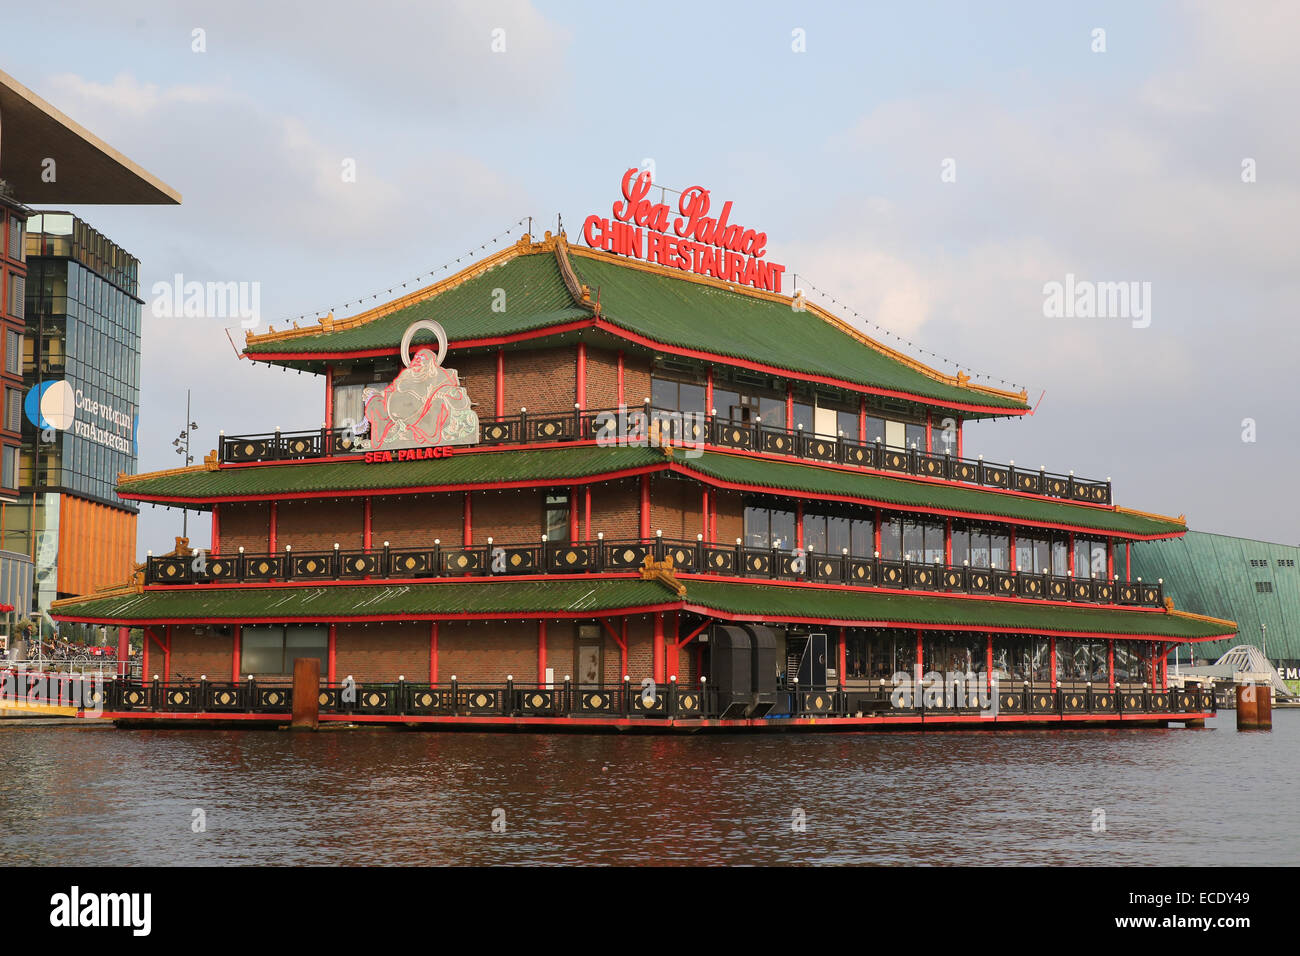 Verwonderlijk sea palace Chinese restaurant in Amsterdam Stock Photo: 76524009 NL-67